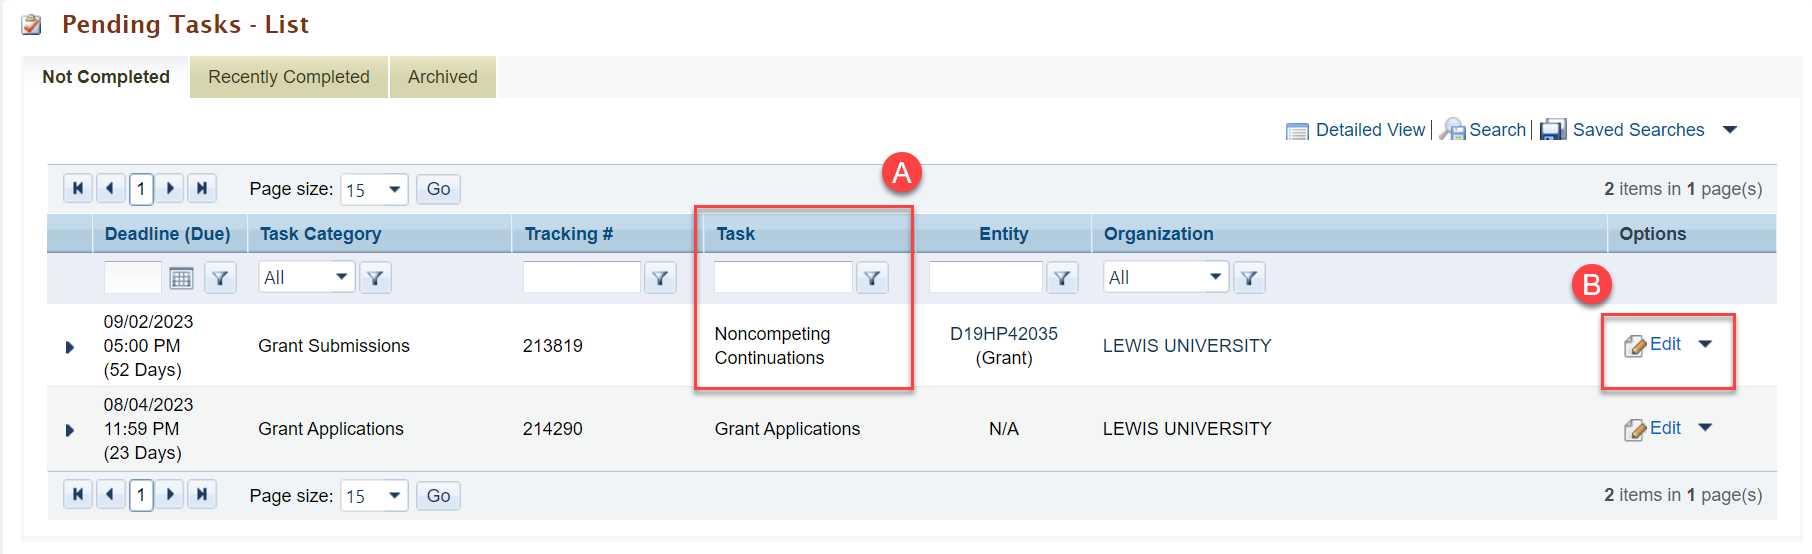 Screenshot of Pending Tasks list page